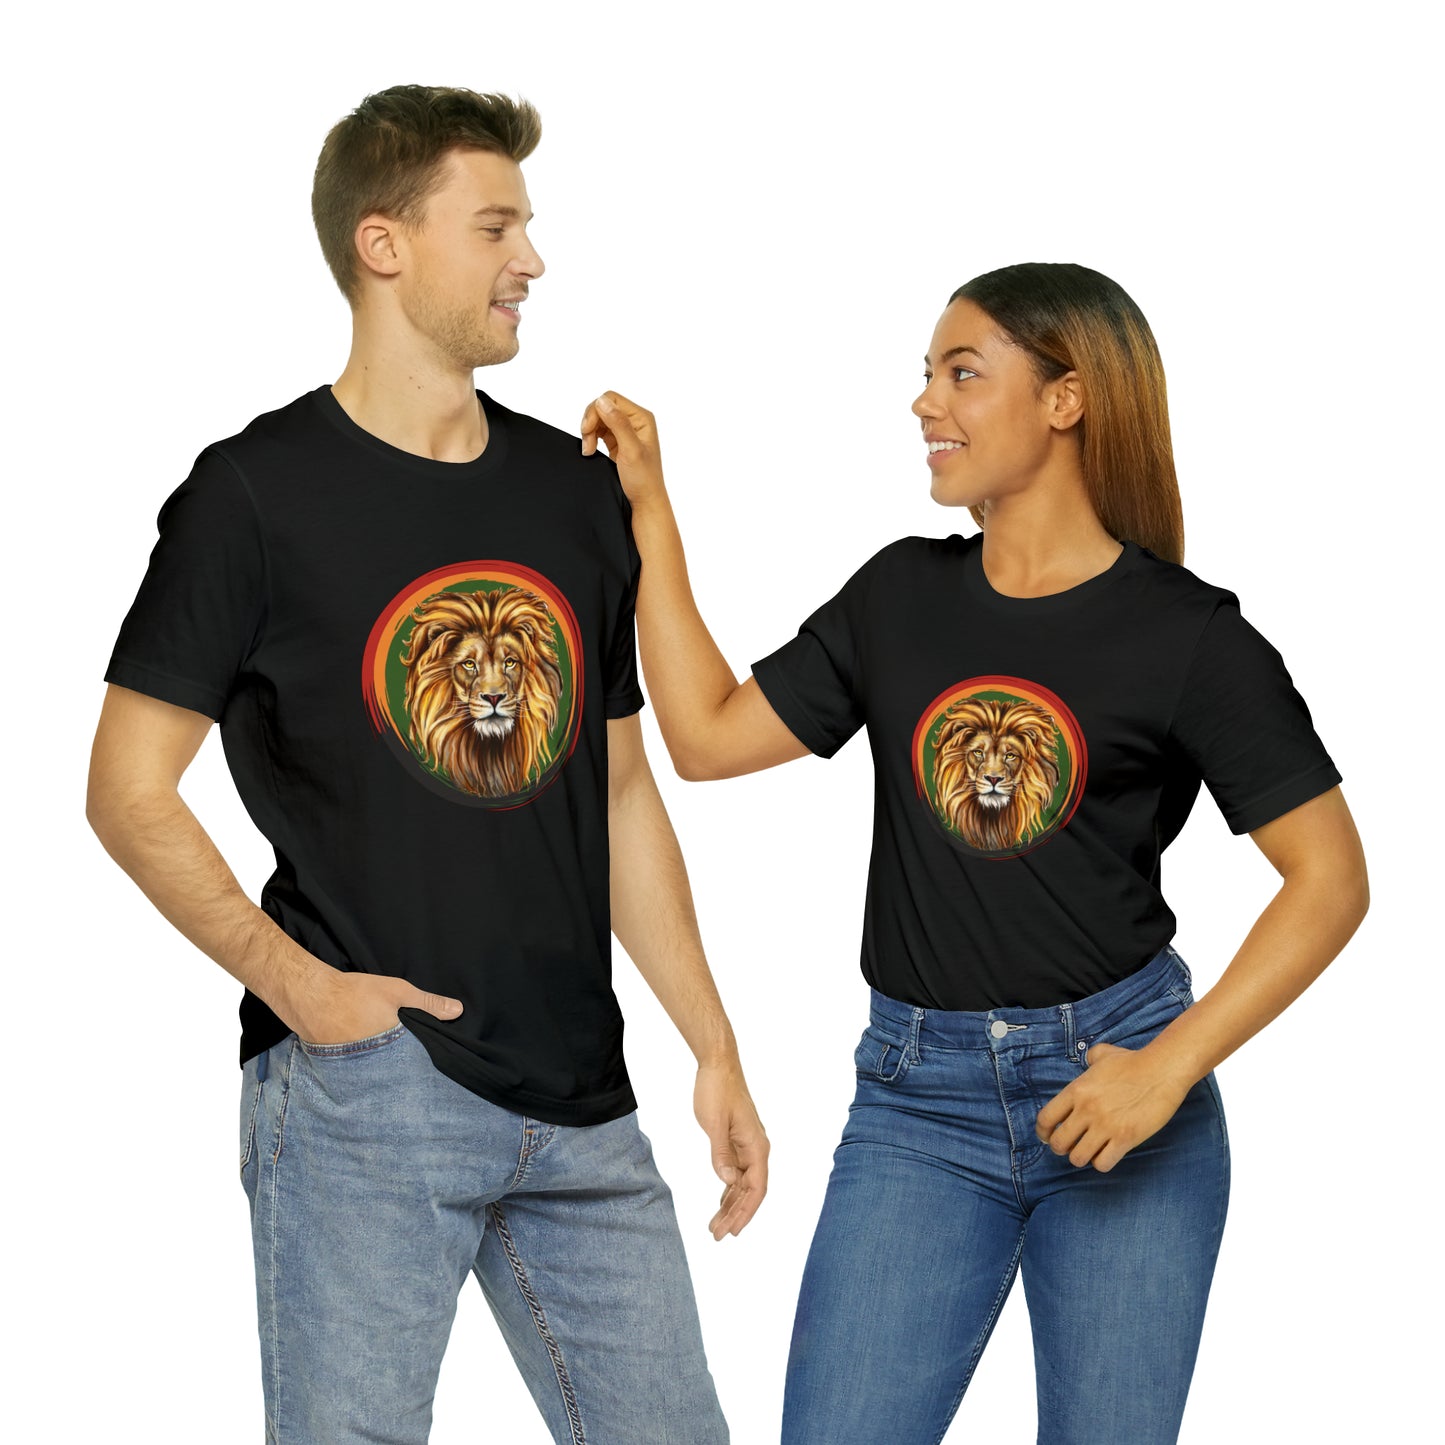 Lion, Animals, Feline (Wild Cats)- Adult- Adult, Regular Fit, Soft Cotton, Full Size Image, T-shirt